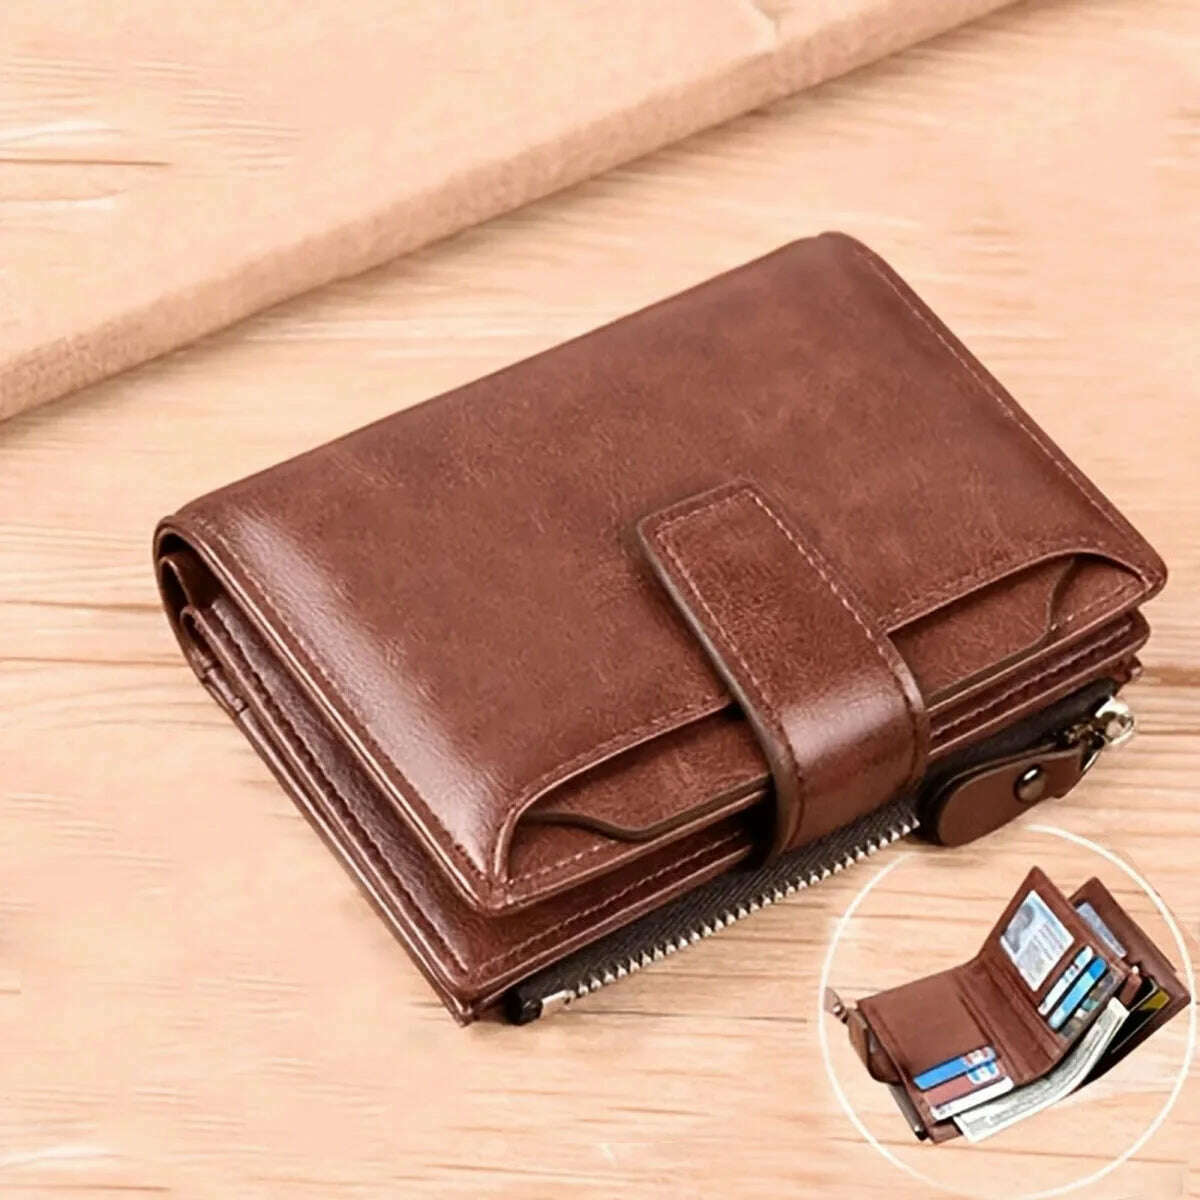 KIMLUD, Men's Coin Purse Wallet RFID Blocking Man PU Leather Wallet Zipper Business Card Holder Money Bag Wallet Male, No LOGO Brown, KIMLUD Womens Clothes